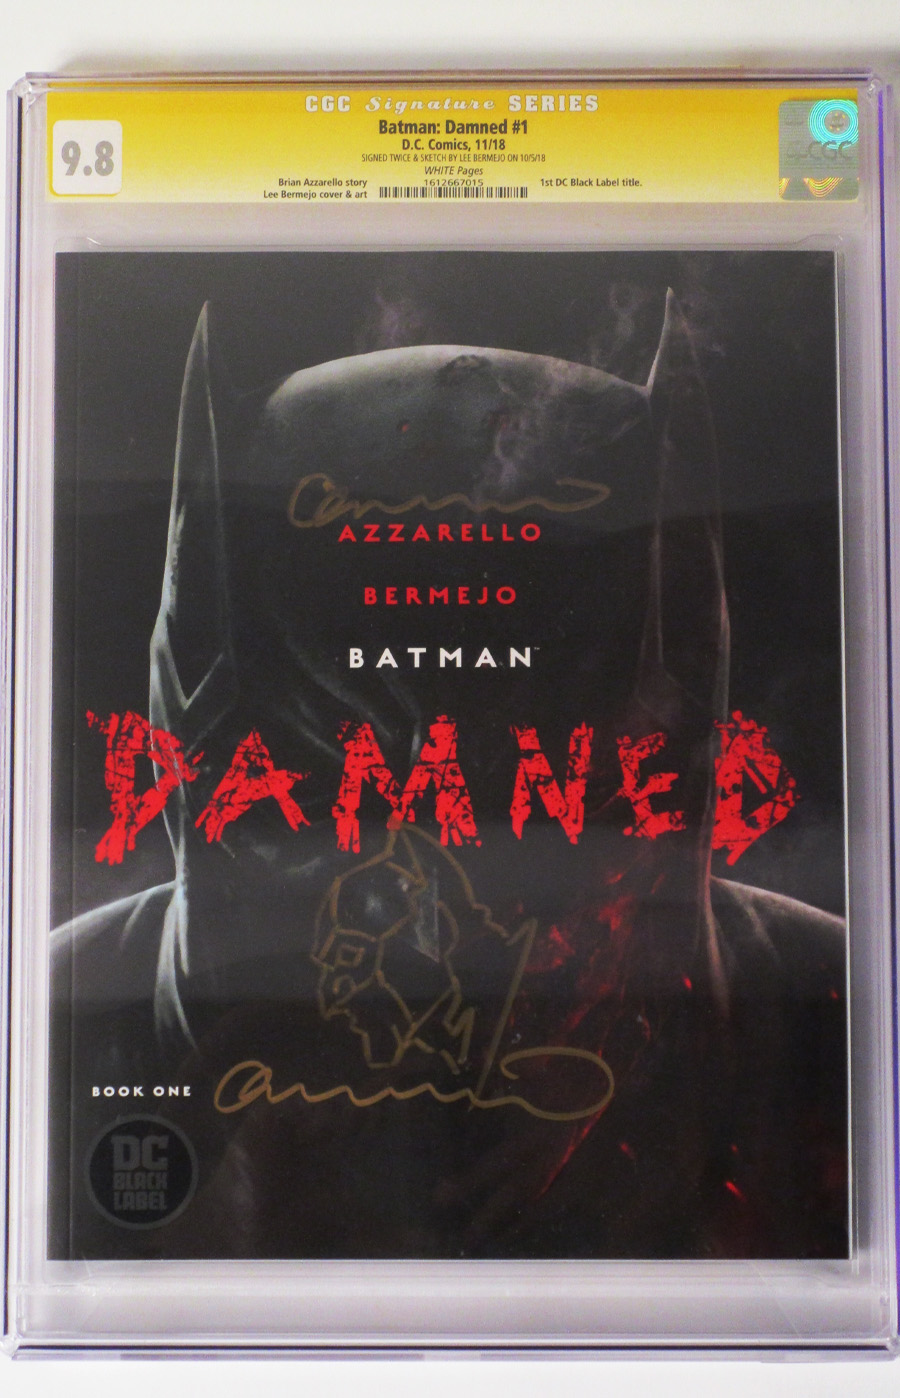 Batman Damned #1 Cover I Variant Jim Lee Cover Signed & Sketched By Lee Bermejo CGC 9.8